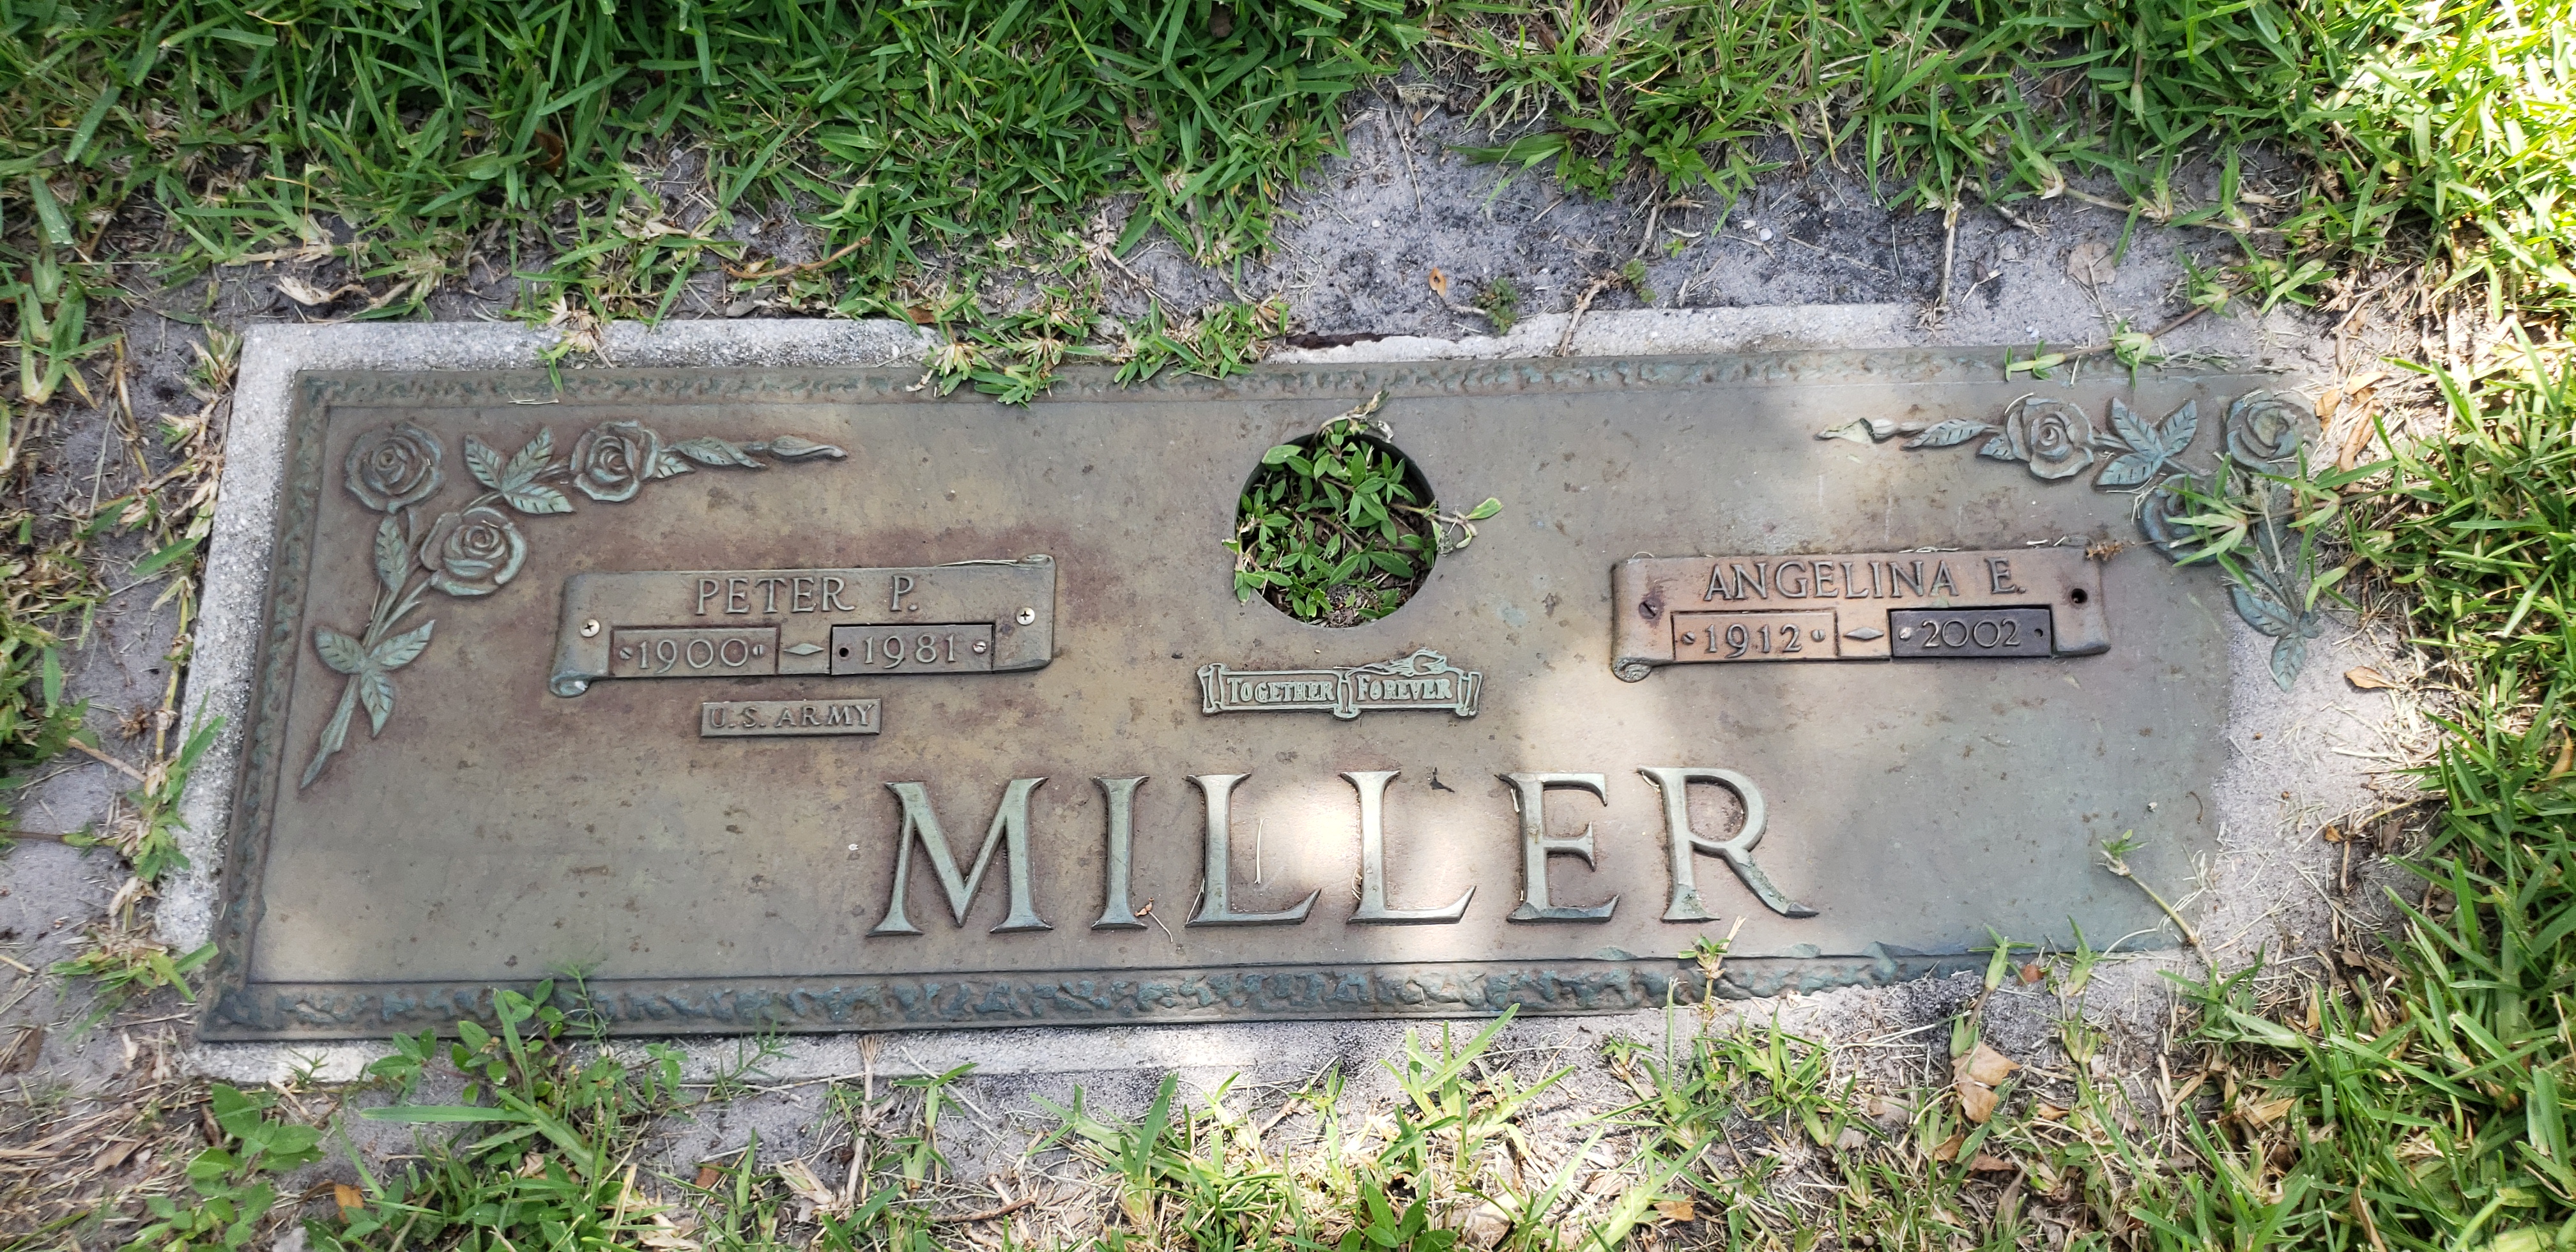 Peter P Miller